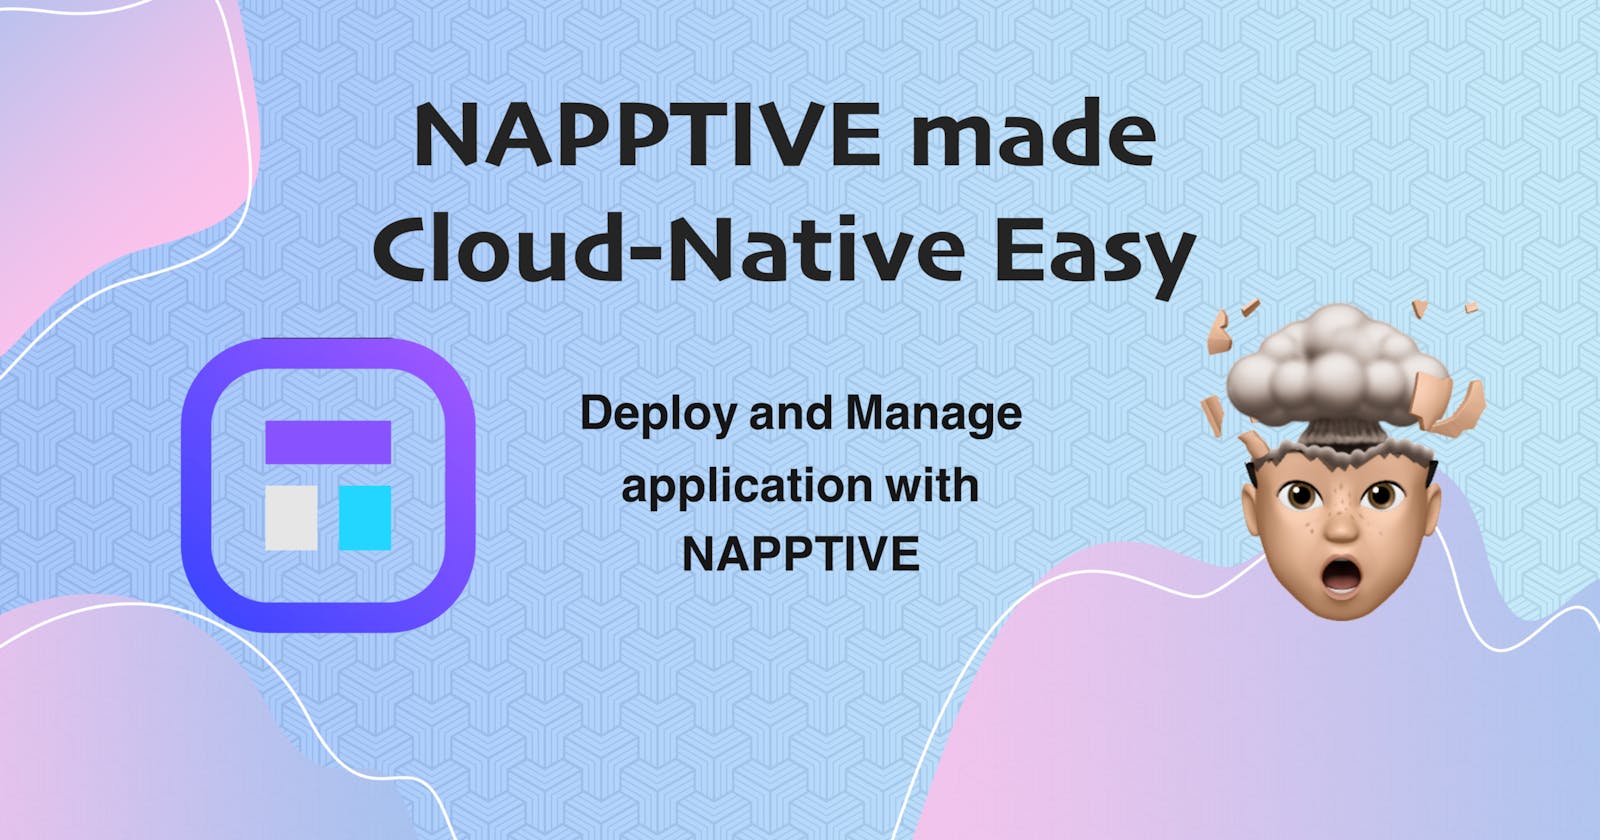 NAPPTIVE made Cloud-Native Easy 🤯